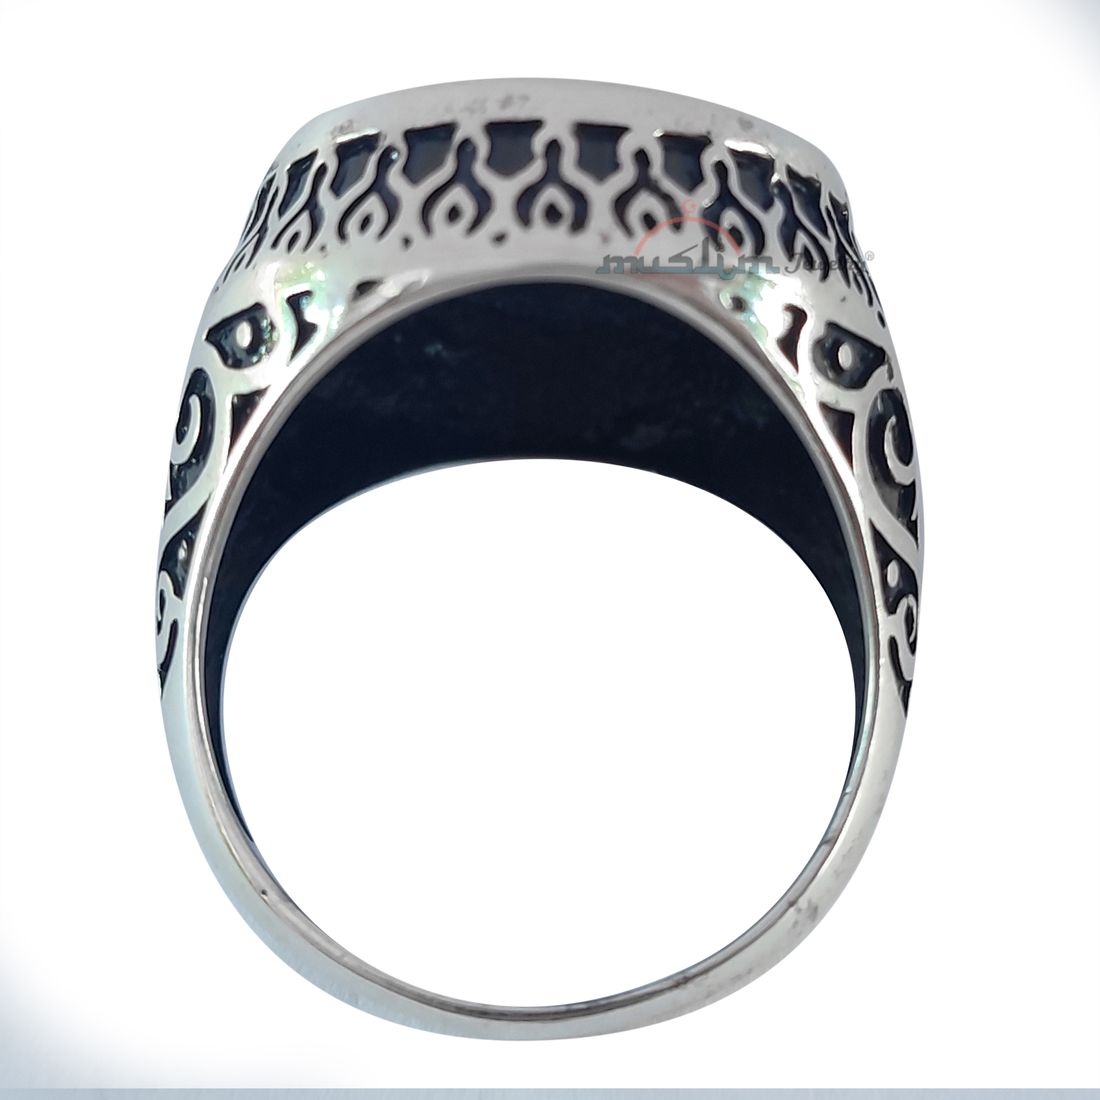 Muslim Men’s Ring Sterling Silver Islamic Star Crescent Moon – Embossed Black Oxidized Design